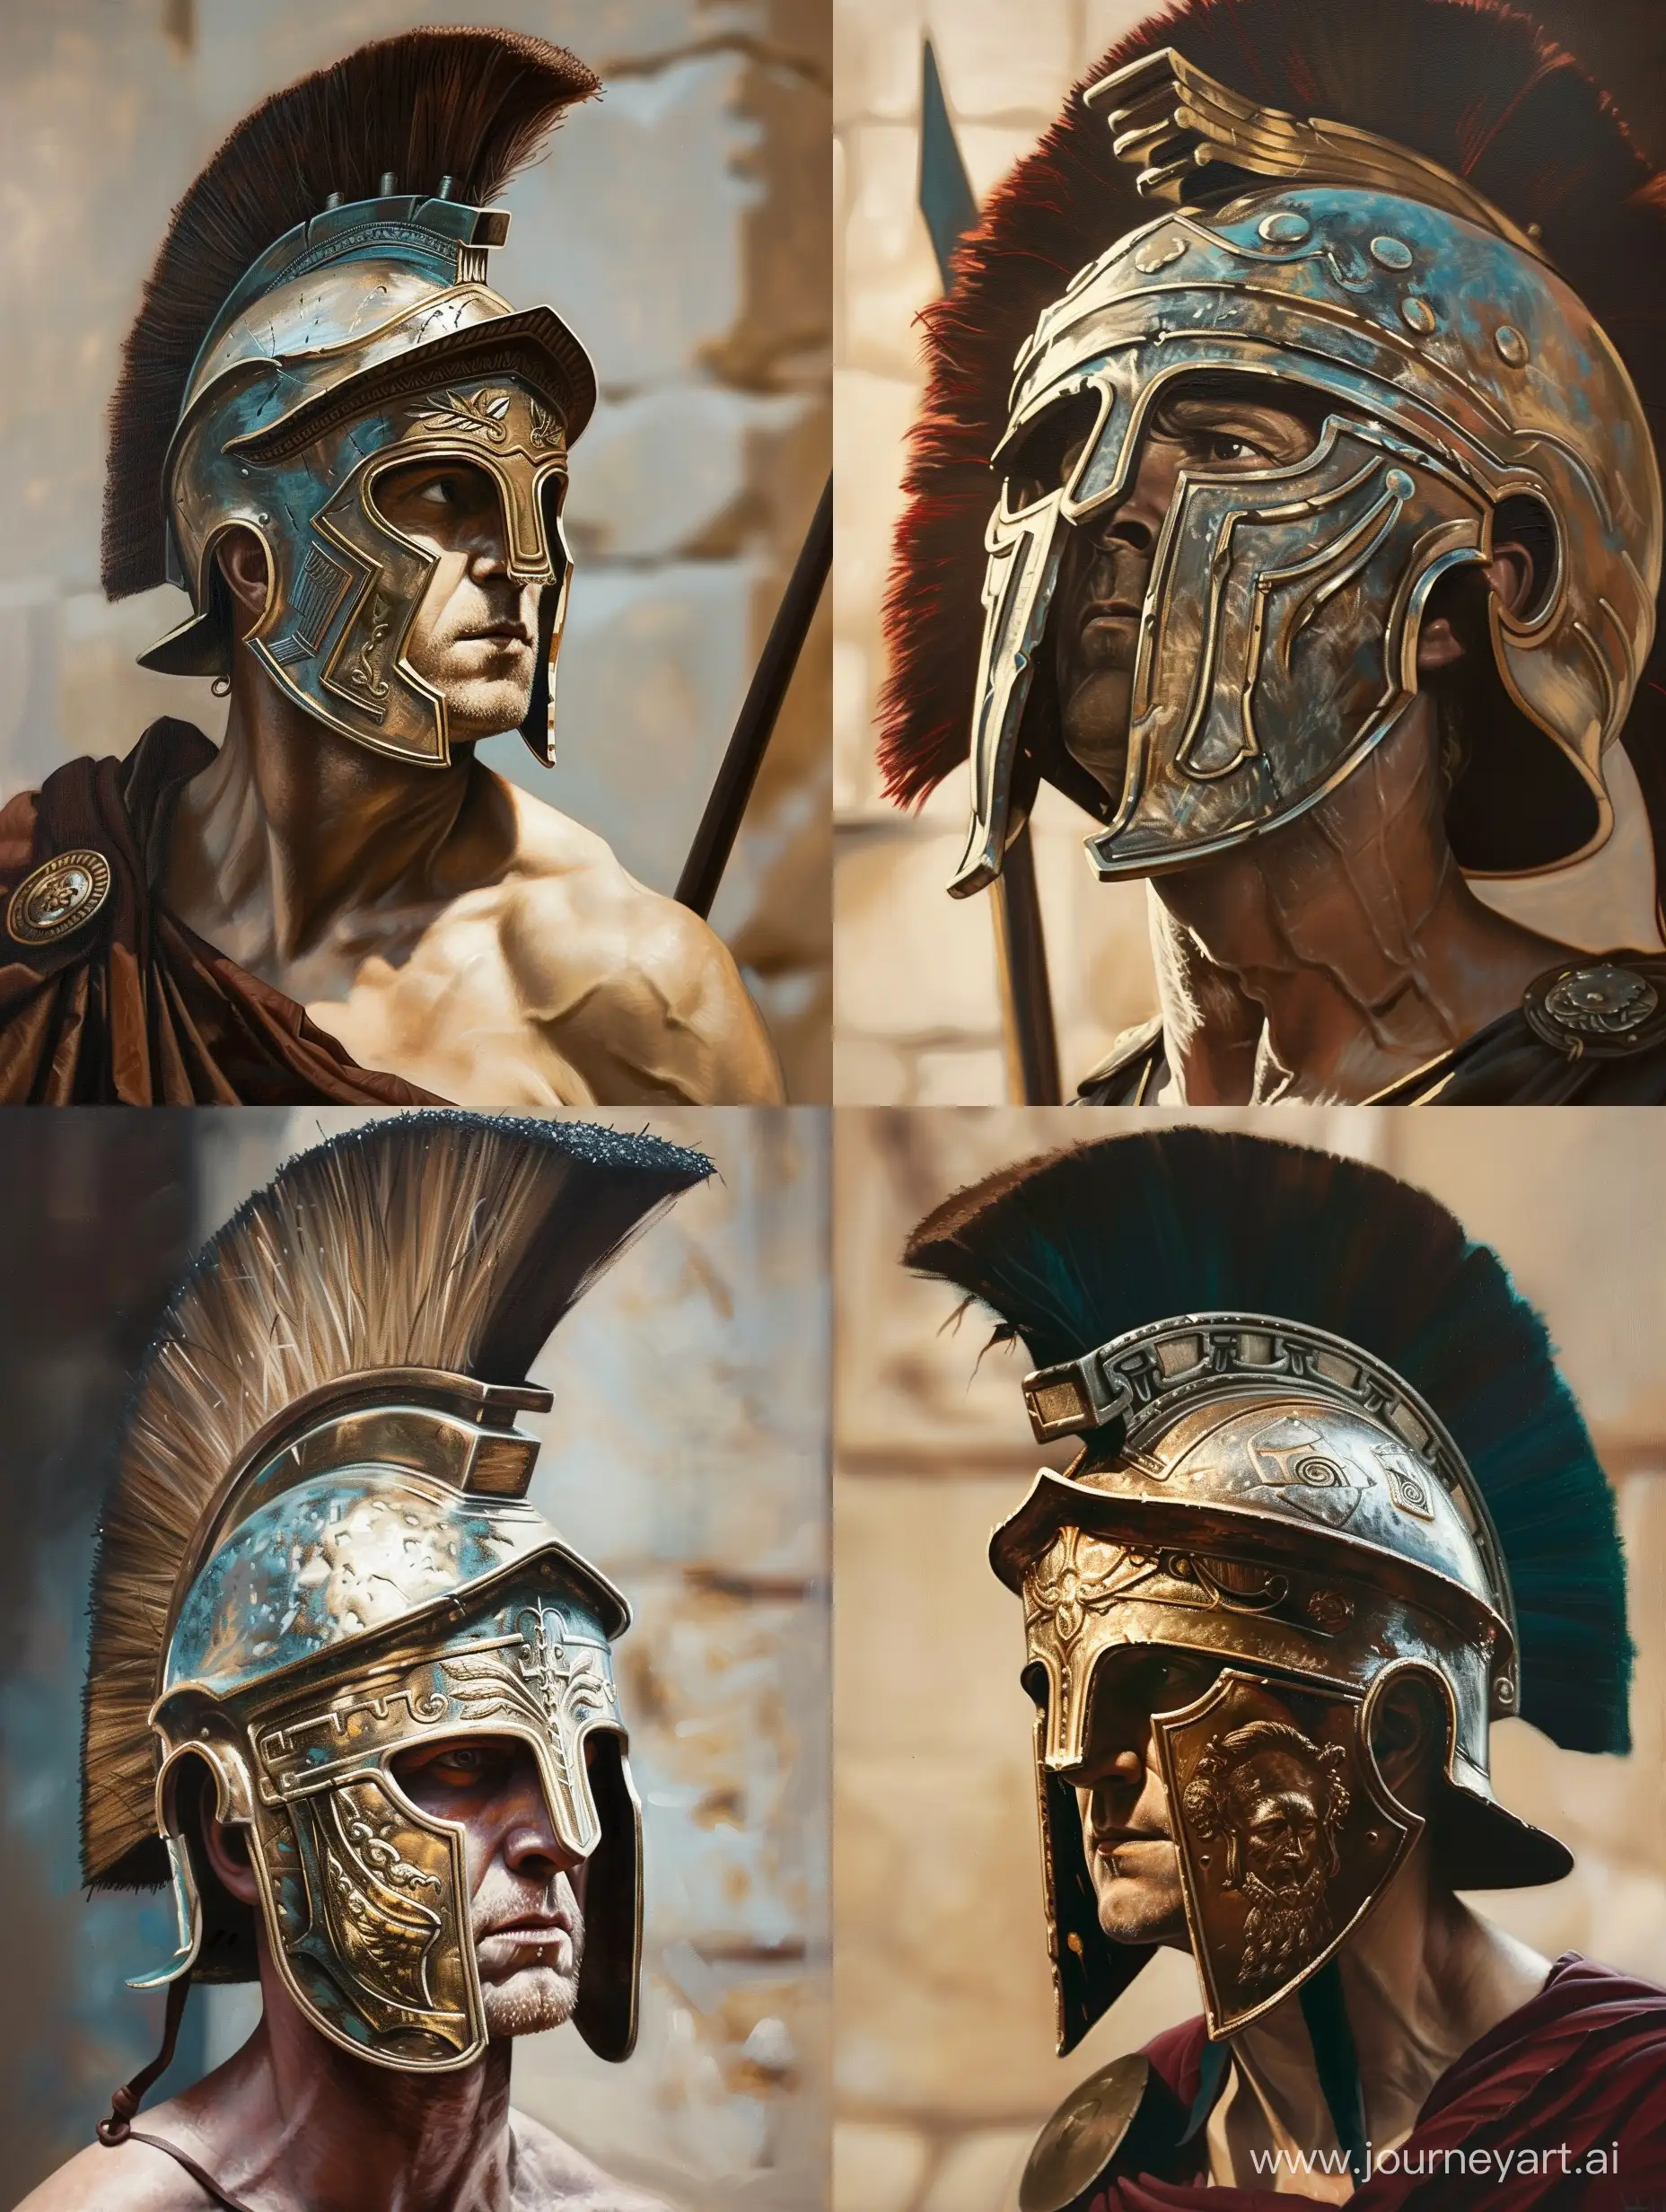 https://i.etsystatic.com/11651996/r/il/73ca96/1052590995/il_1080xN.1052590995_ad0e.jpg Oil painting of Julius caesar wearing greek helmet